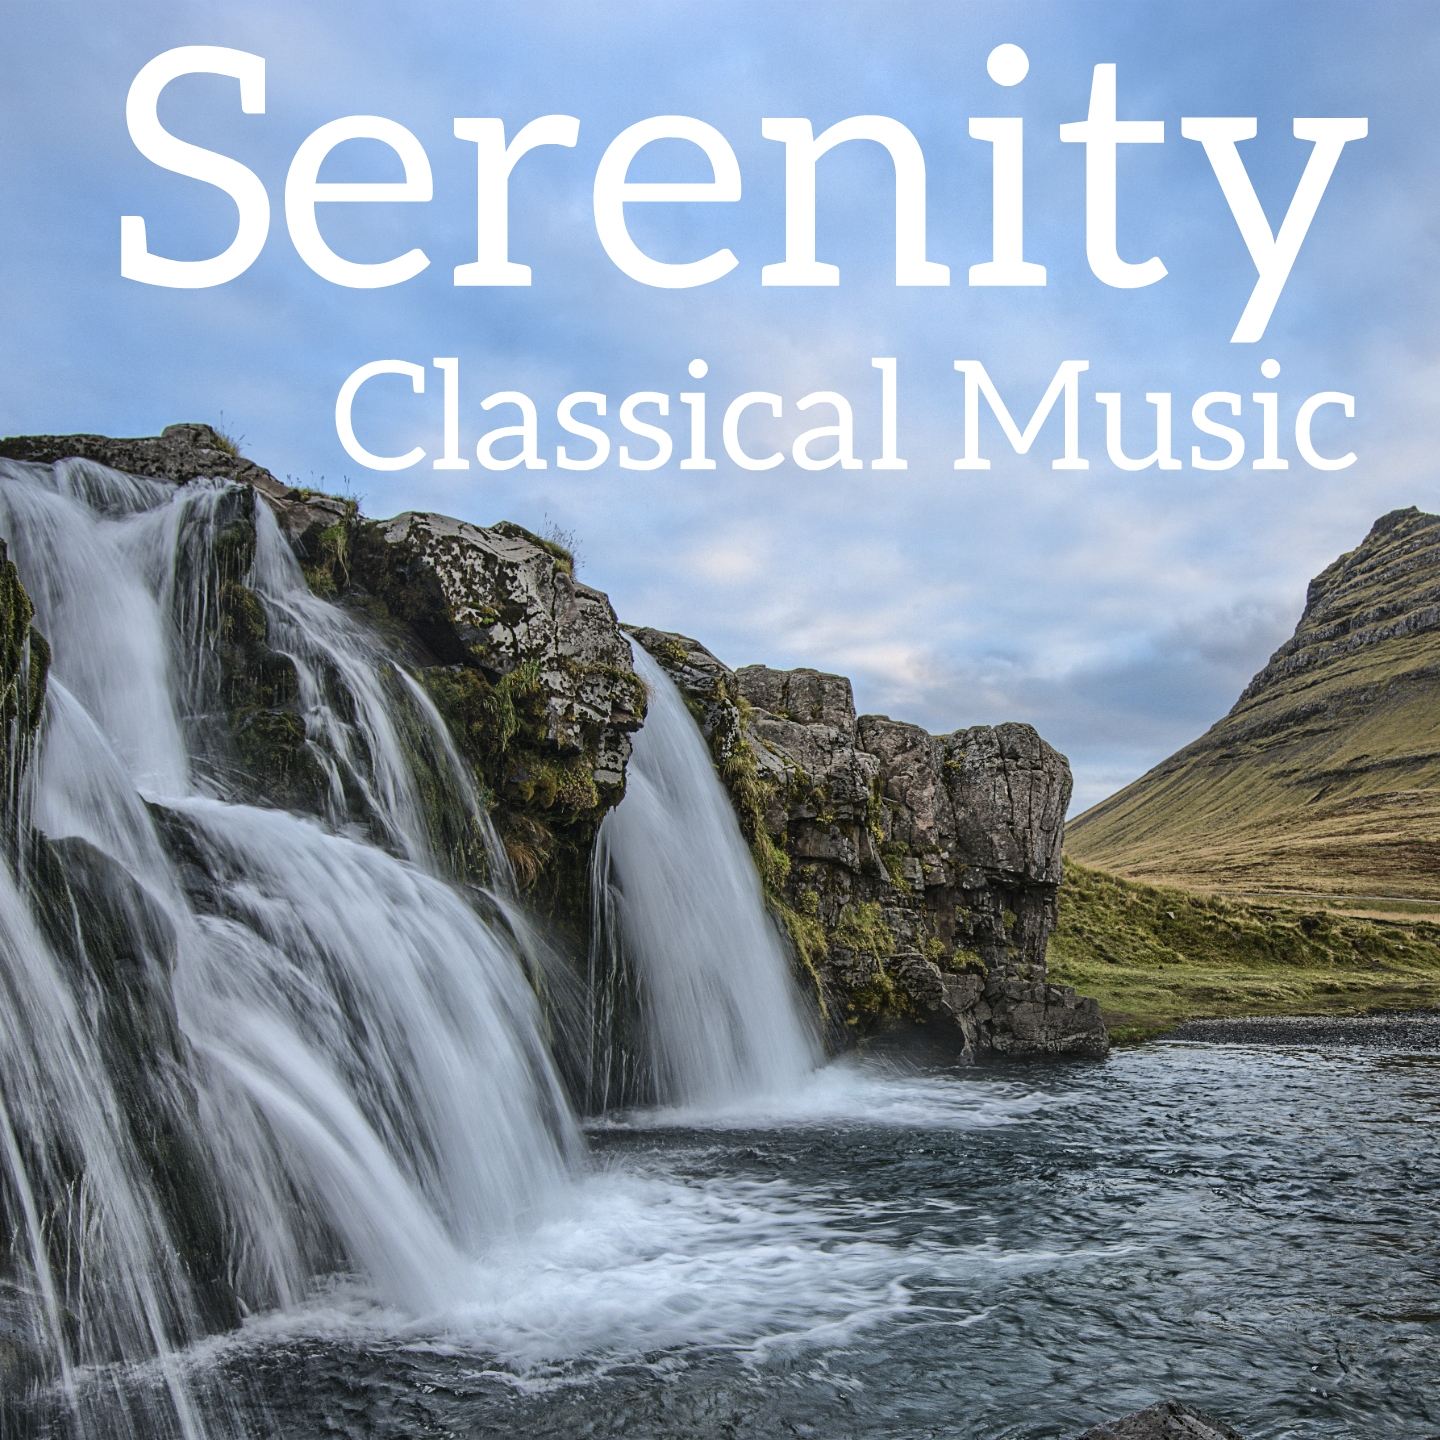 Serenity Classical Music